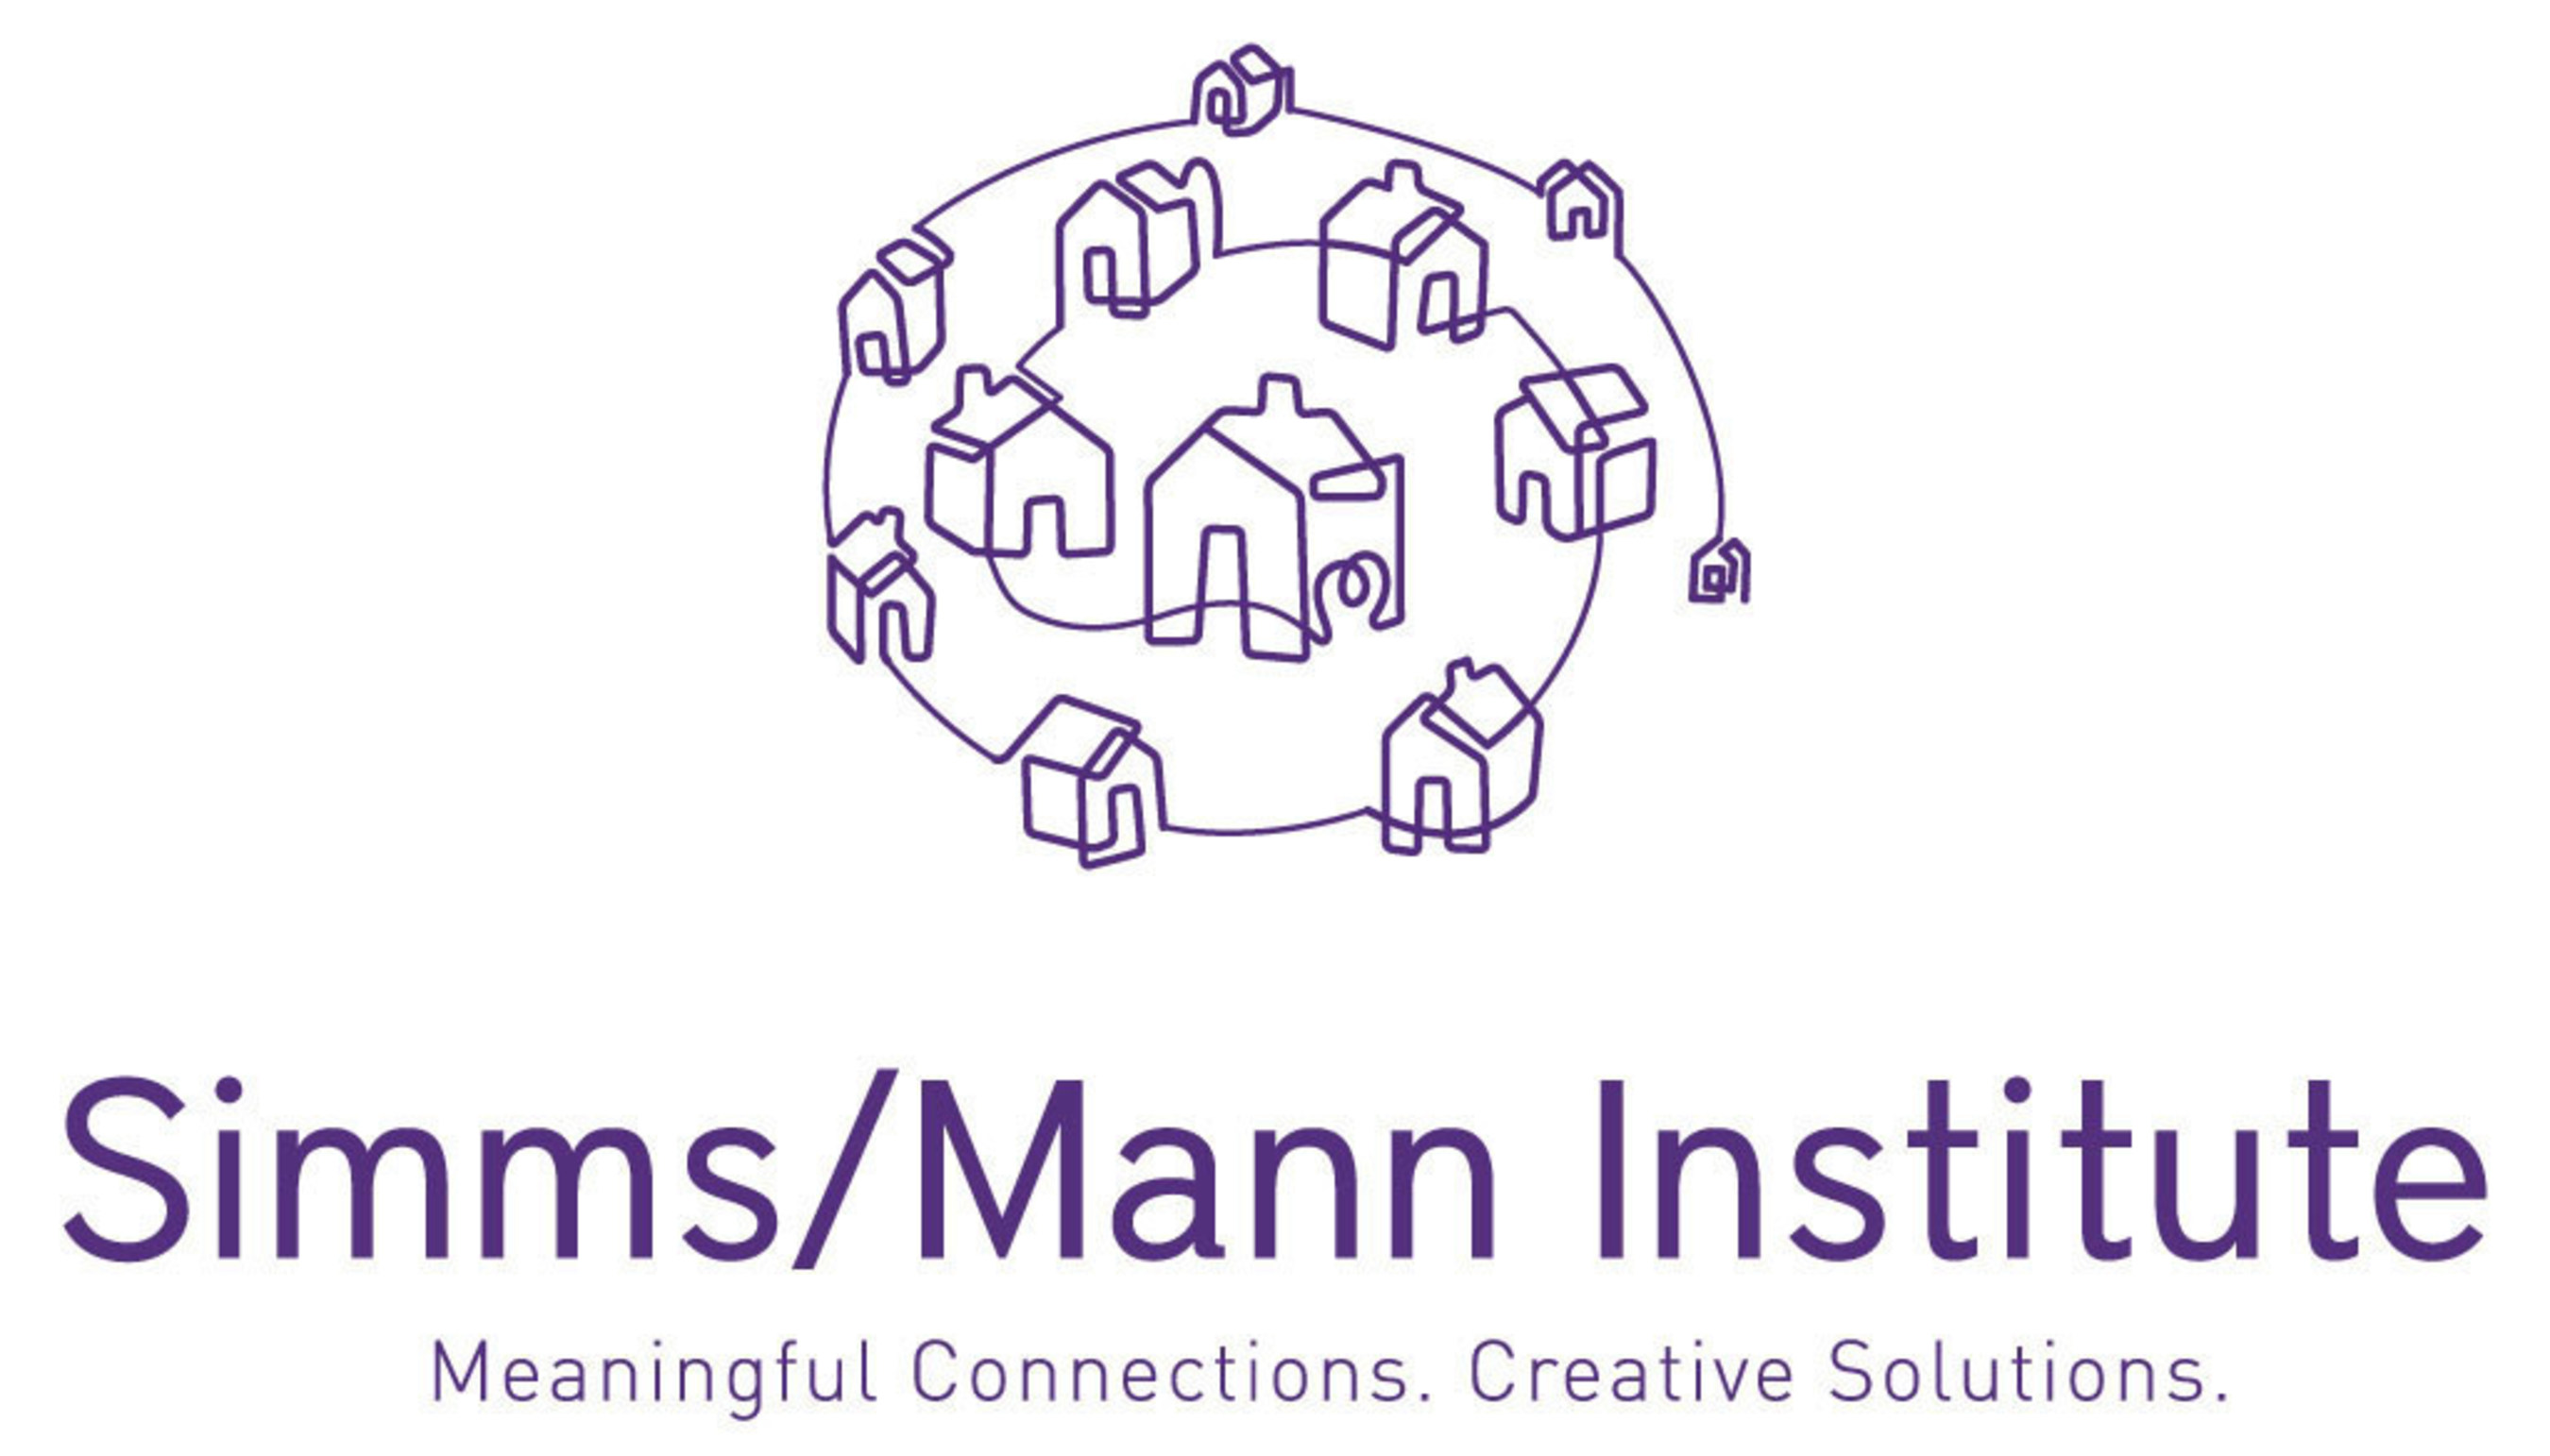 Simms/Mann Institute